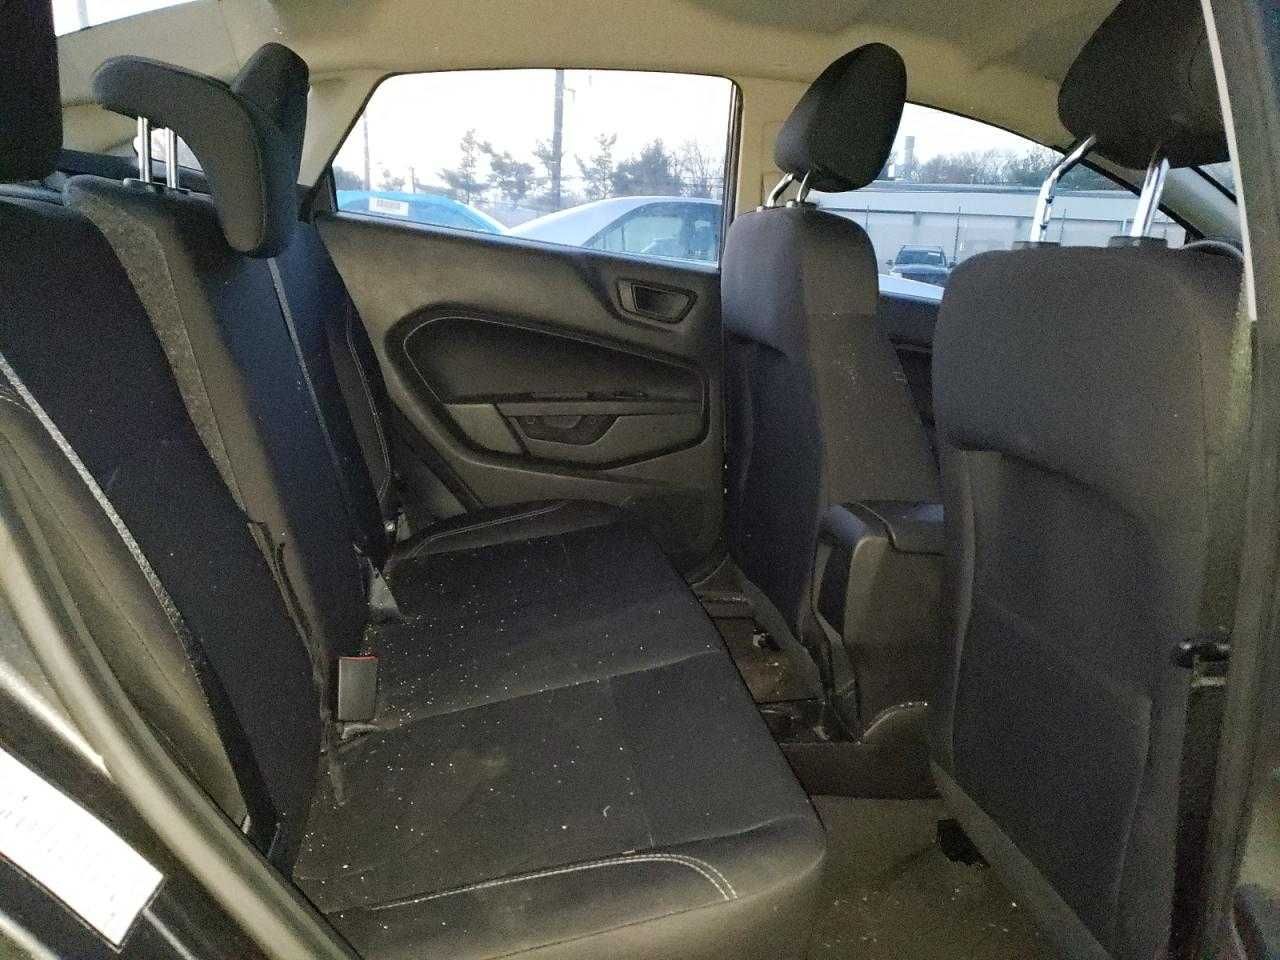 Ford Fiesta SE 2019